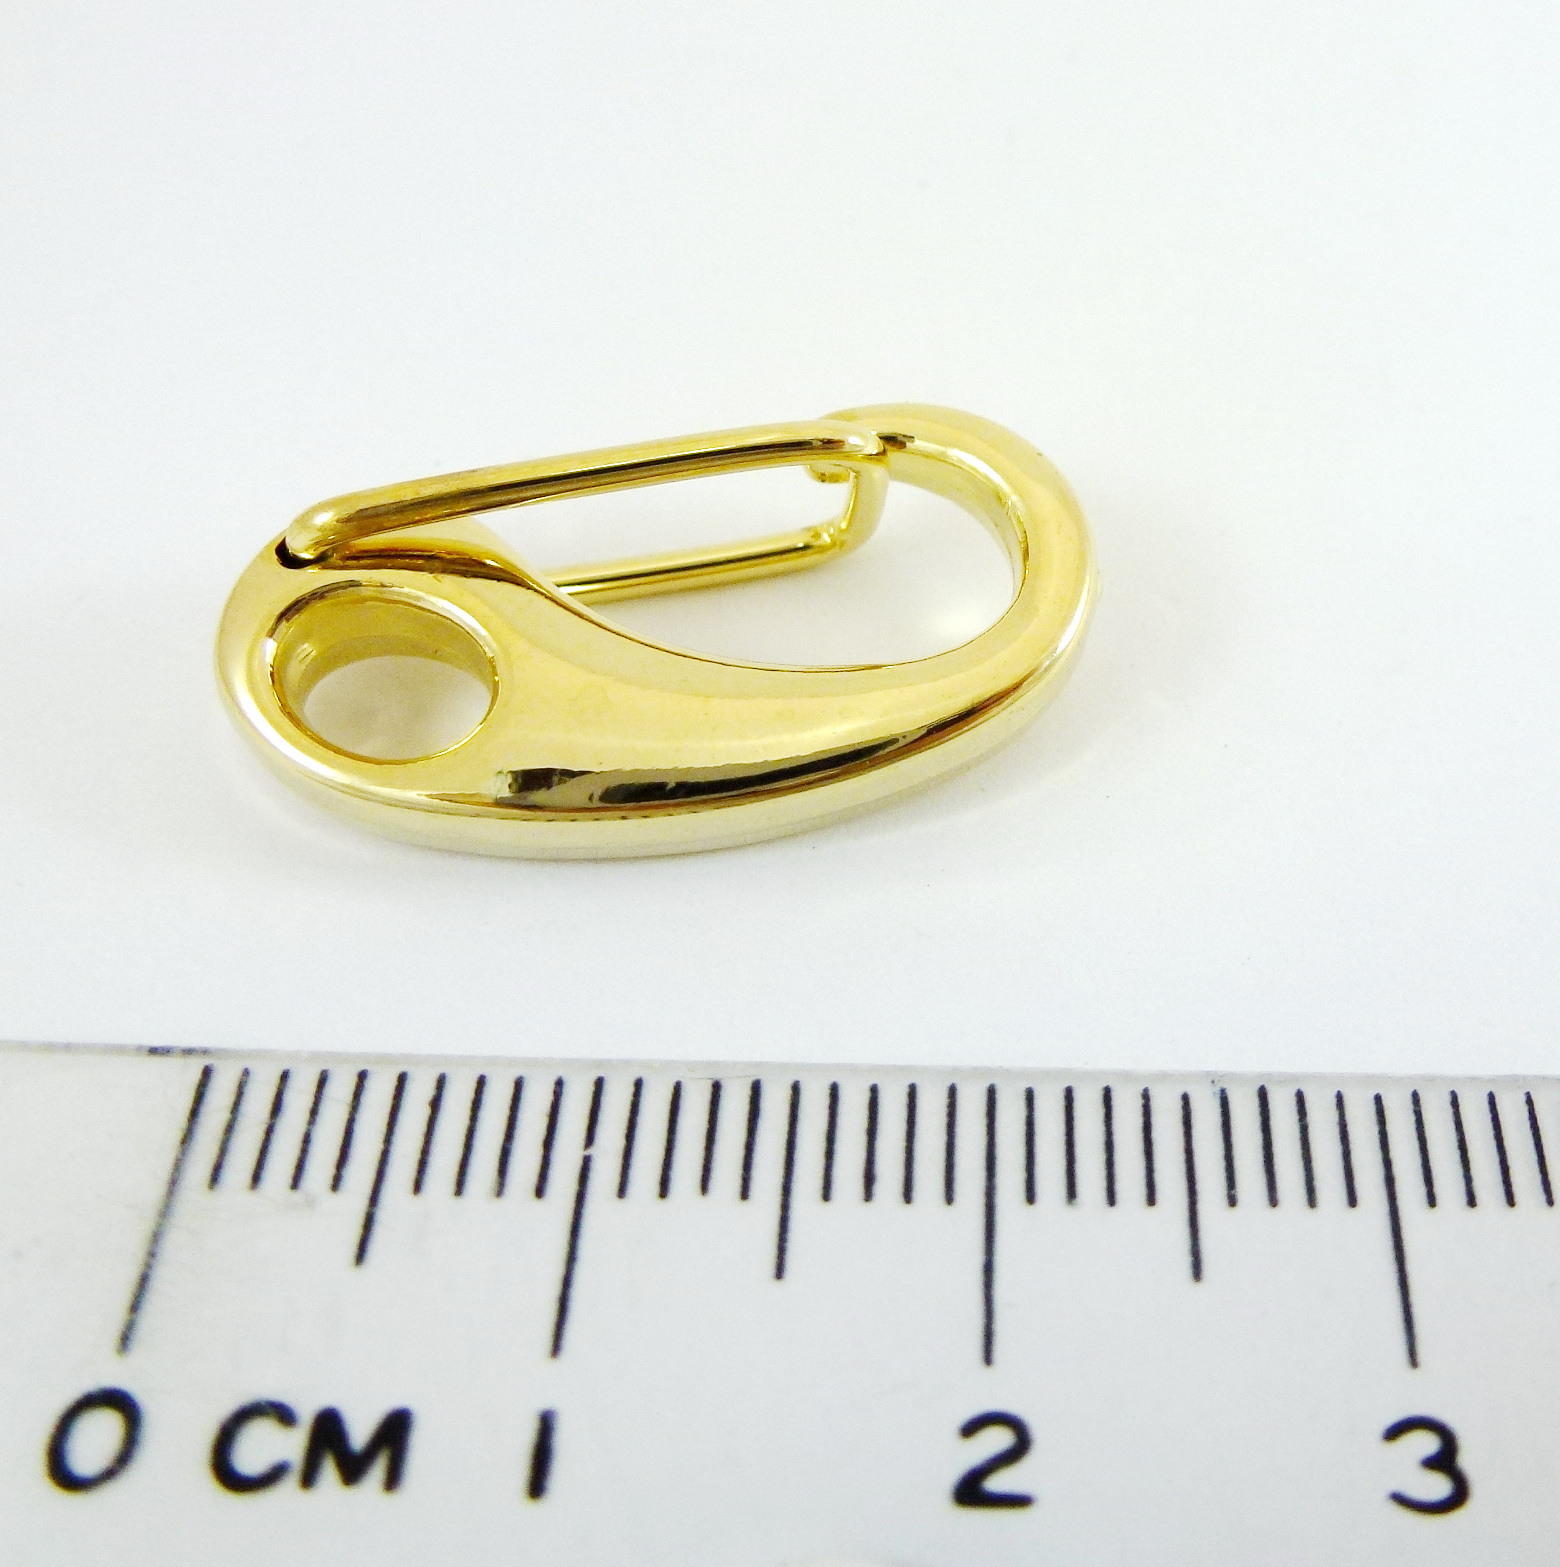 25mm銅鍍變形蟲鉤鑰匙圈